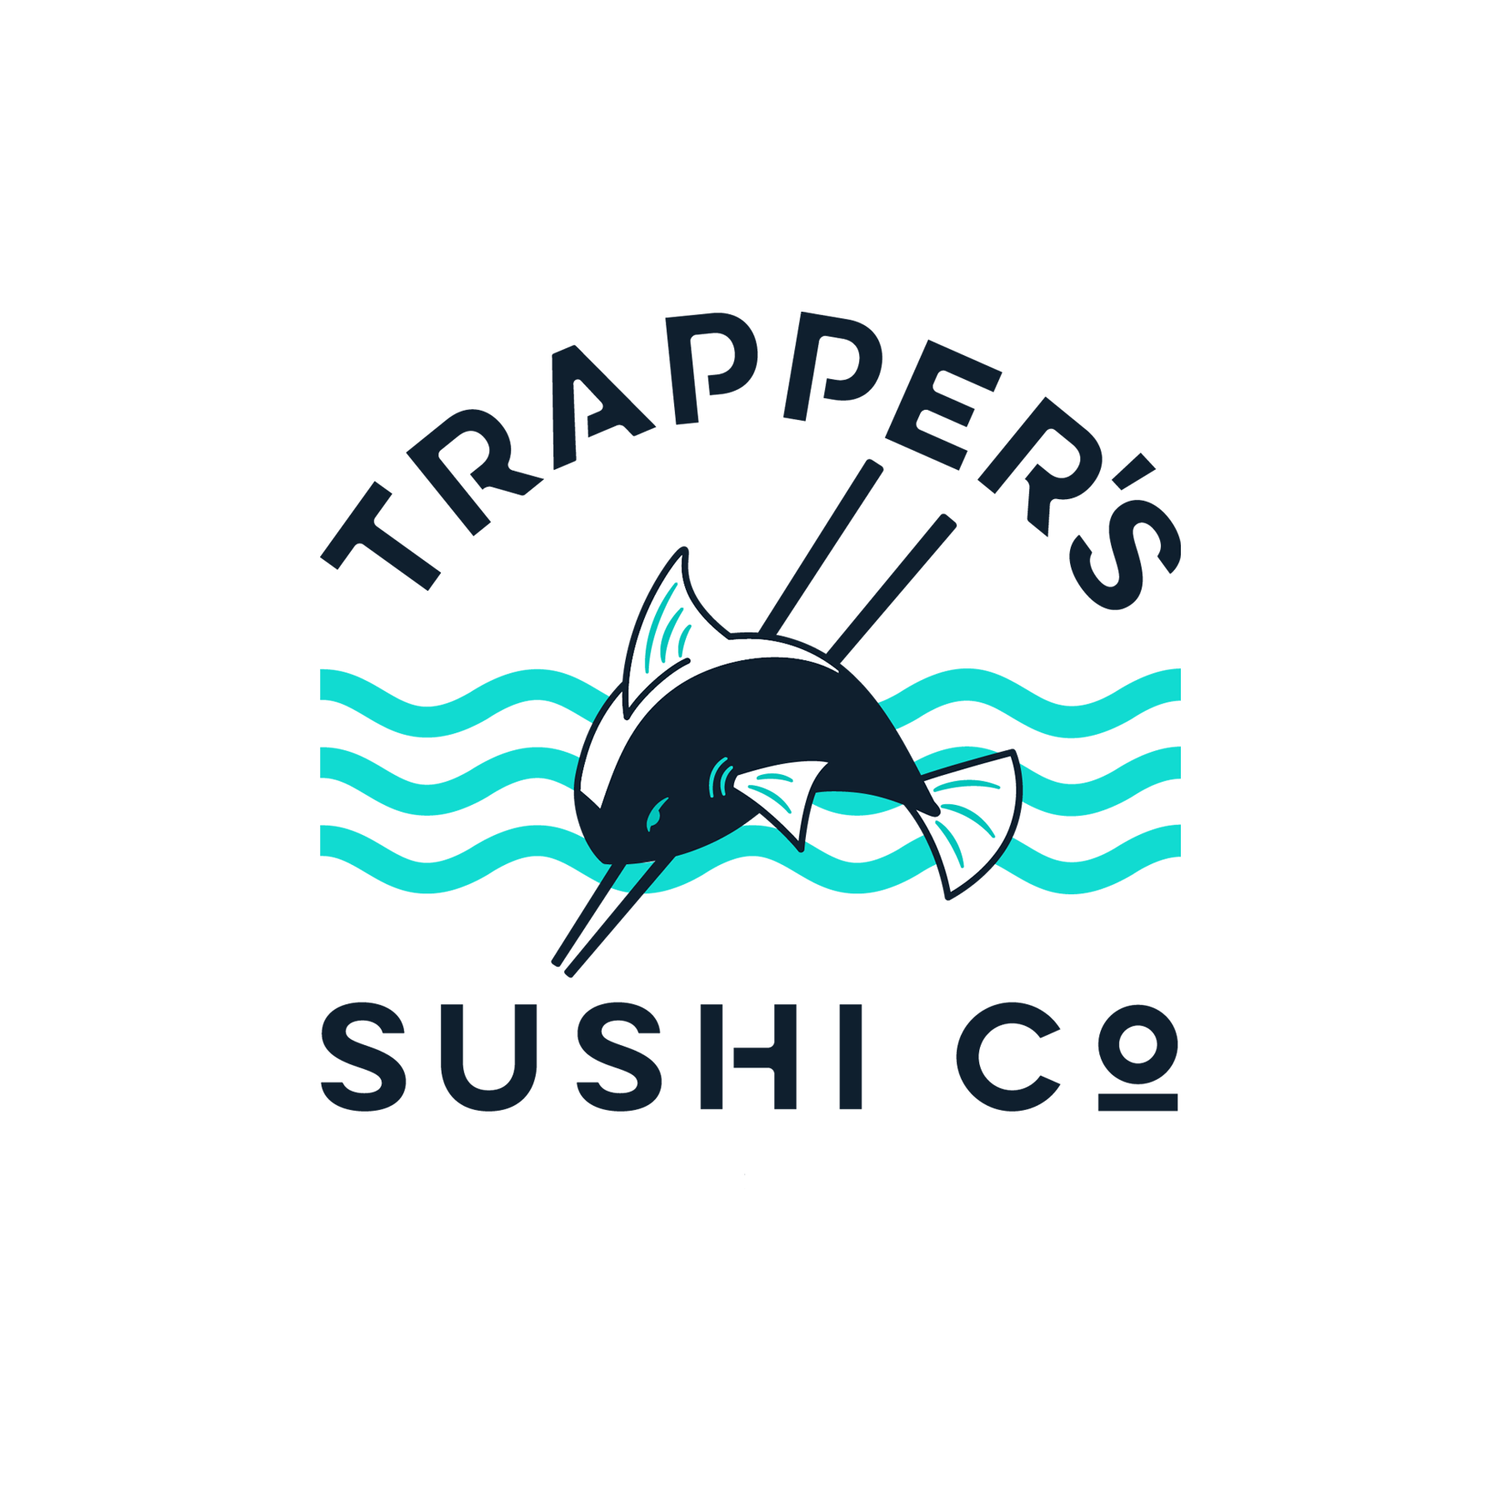 Trapper's Sushi Co.